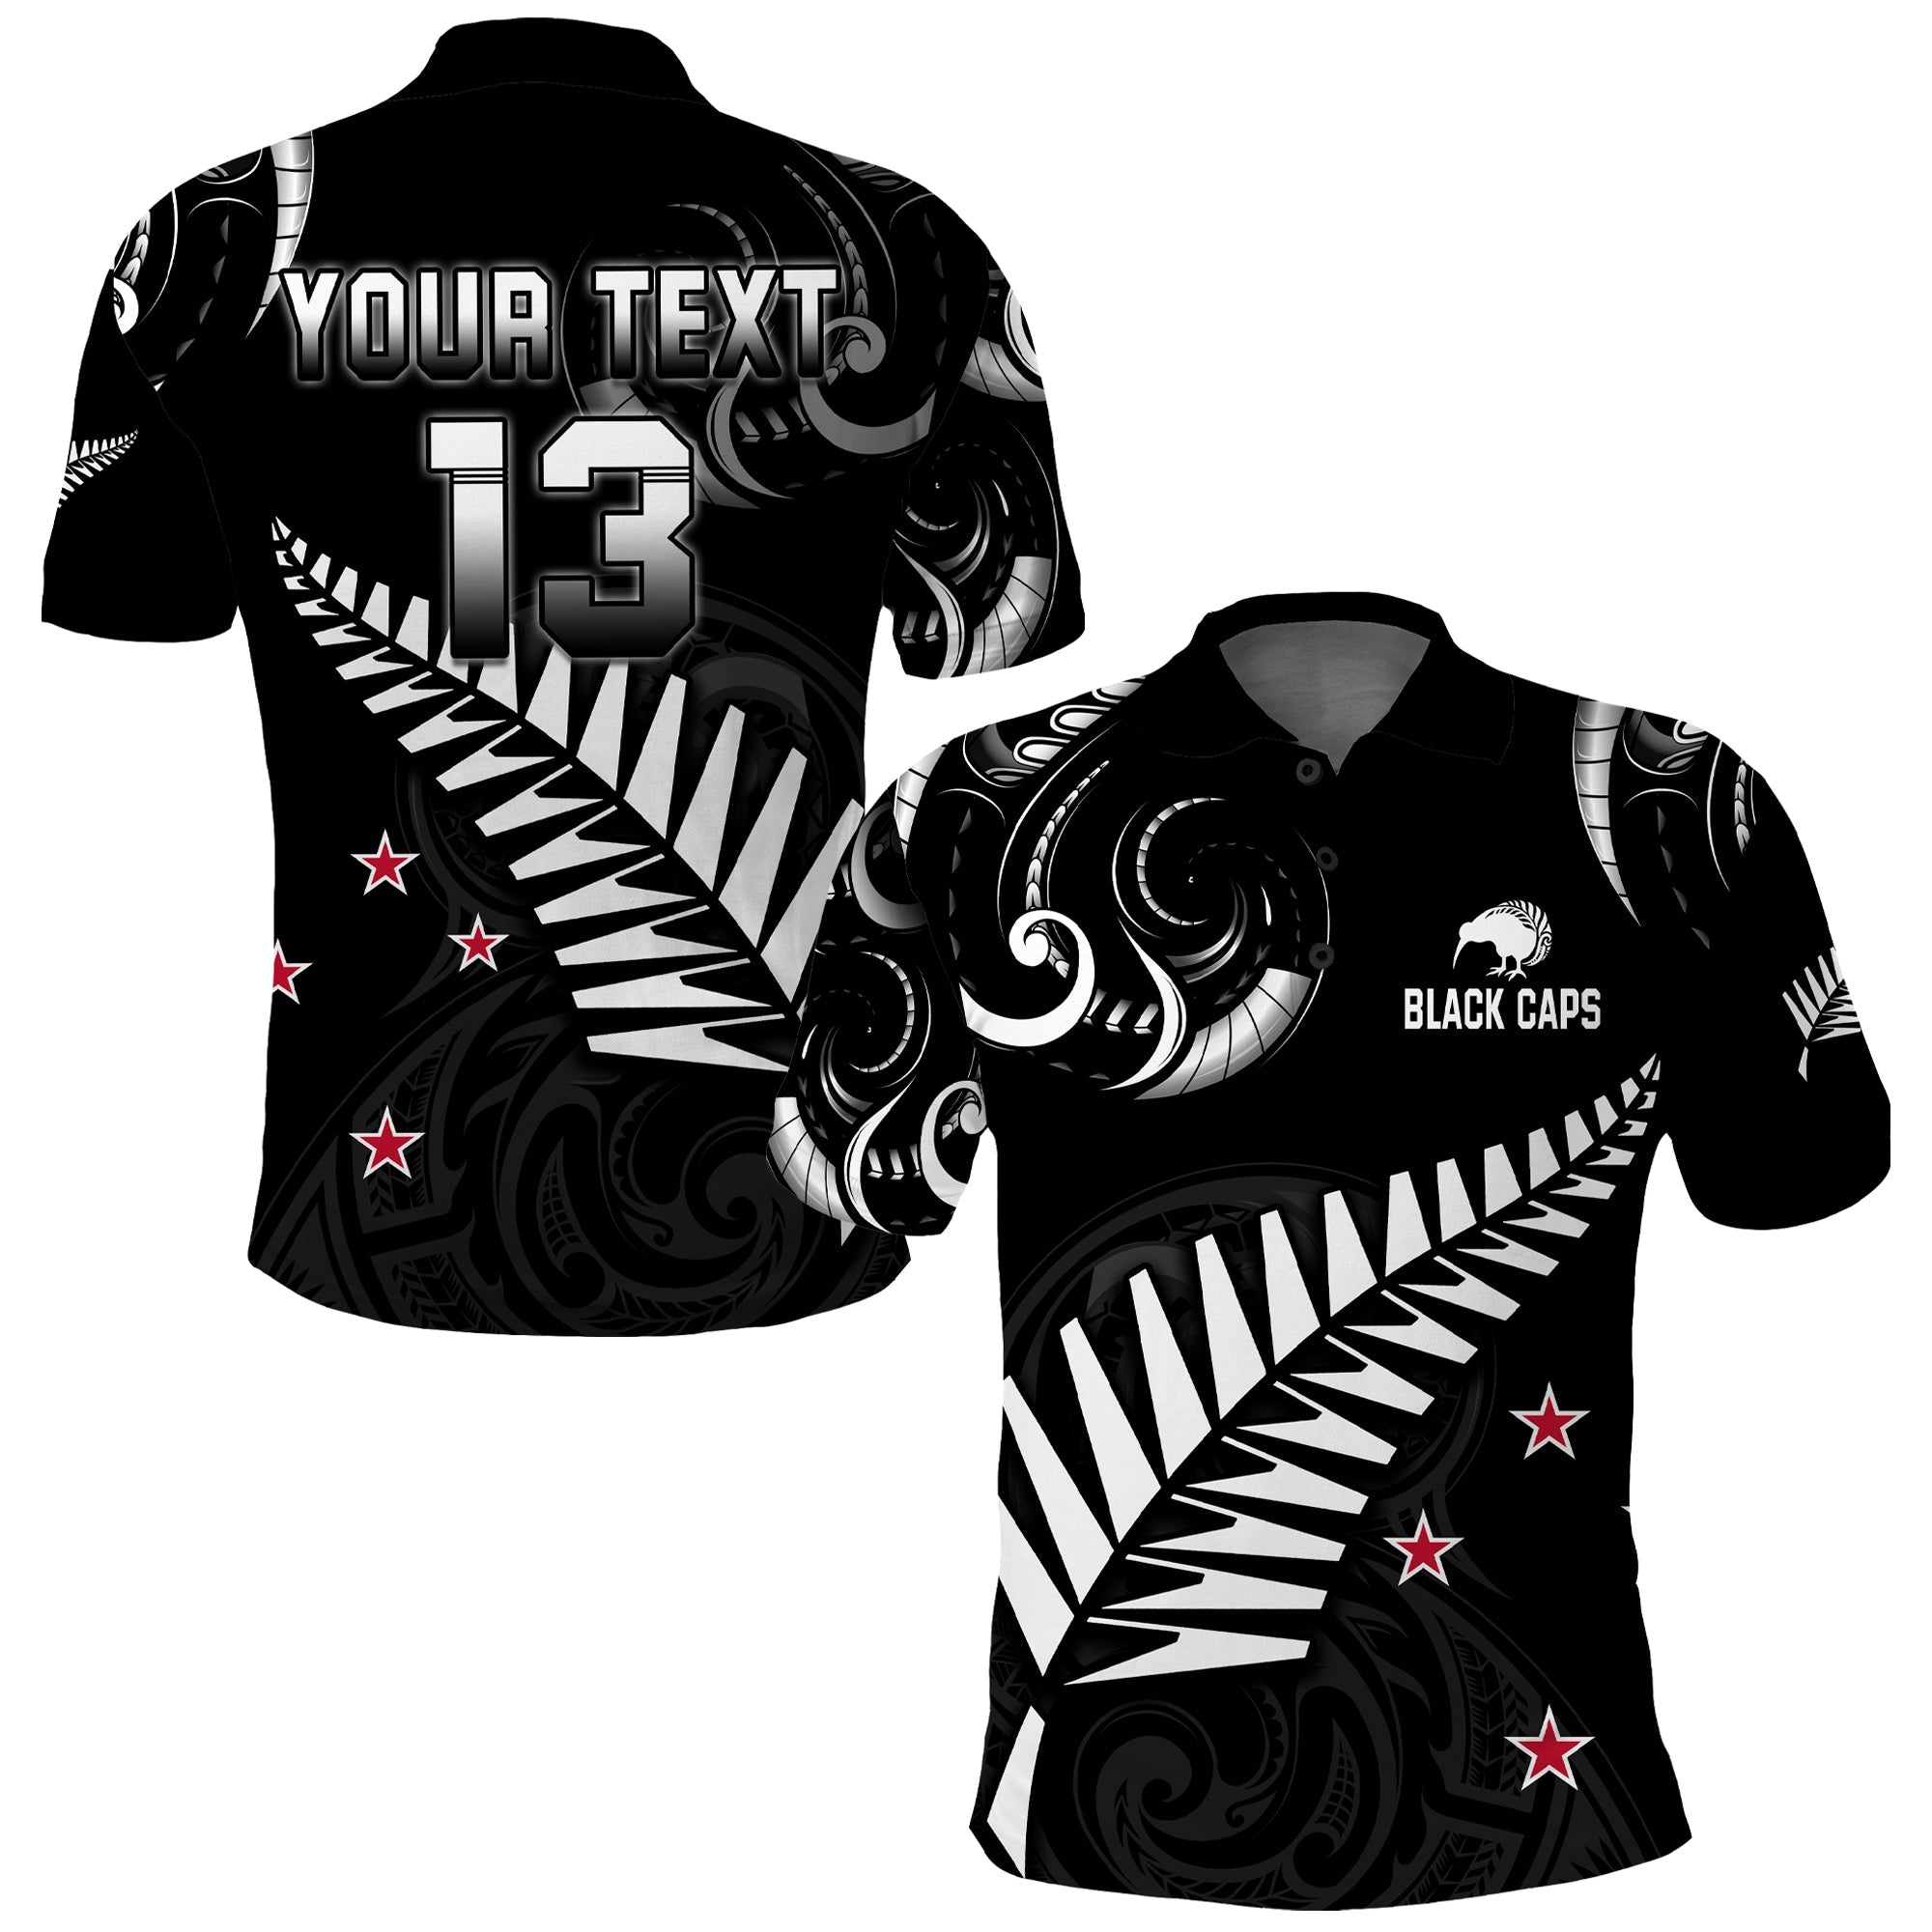 custom-text-and-number-new-zealand-cricket-polo-shirt-go-black-cap-champions-mix-maori-kiwis